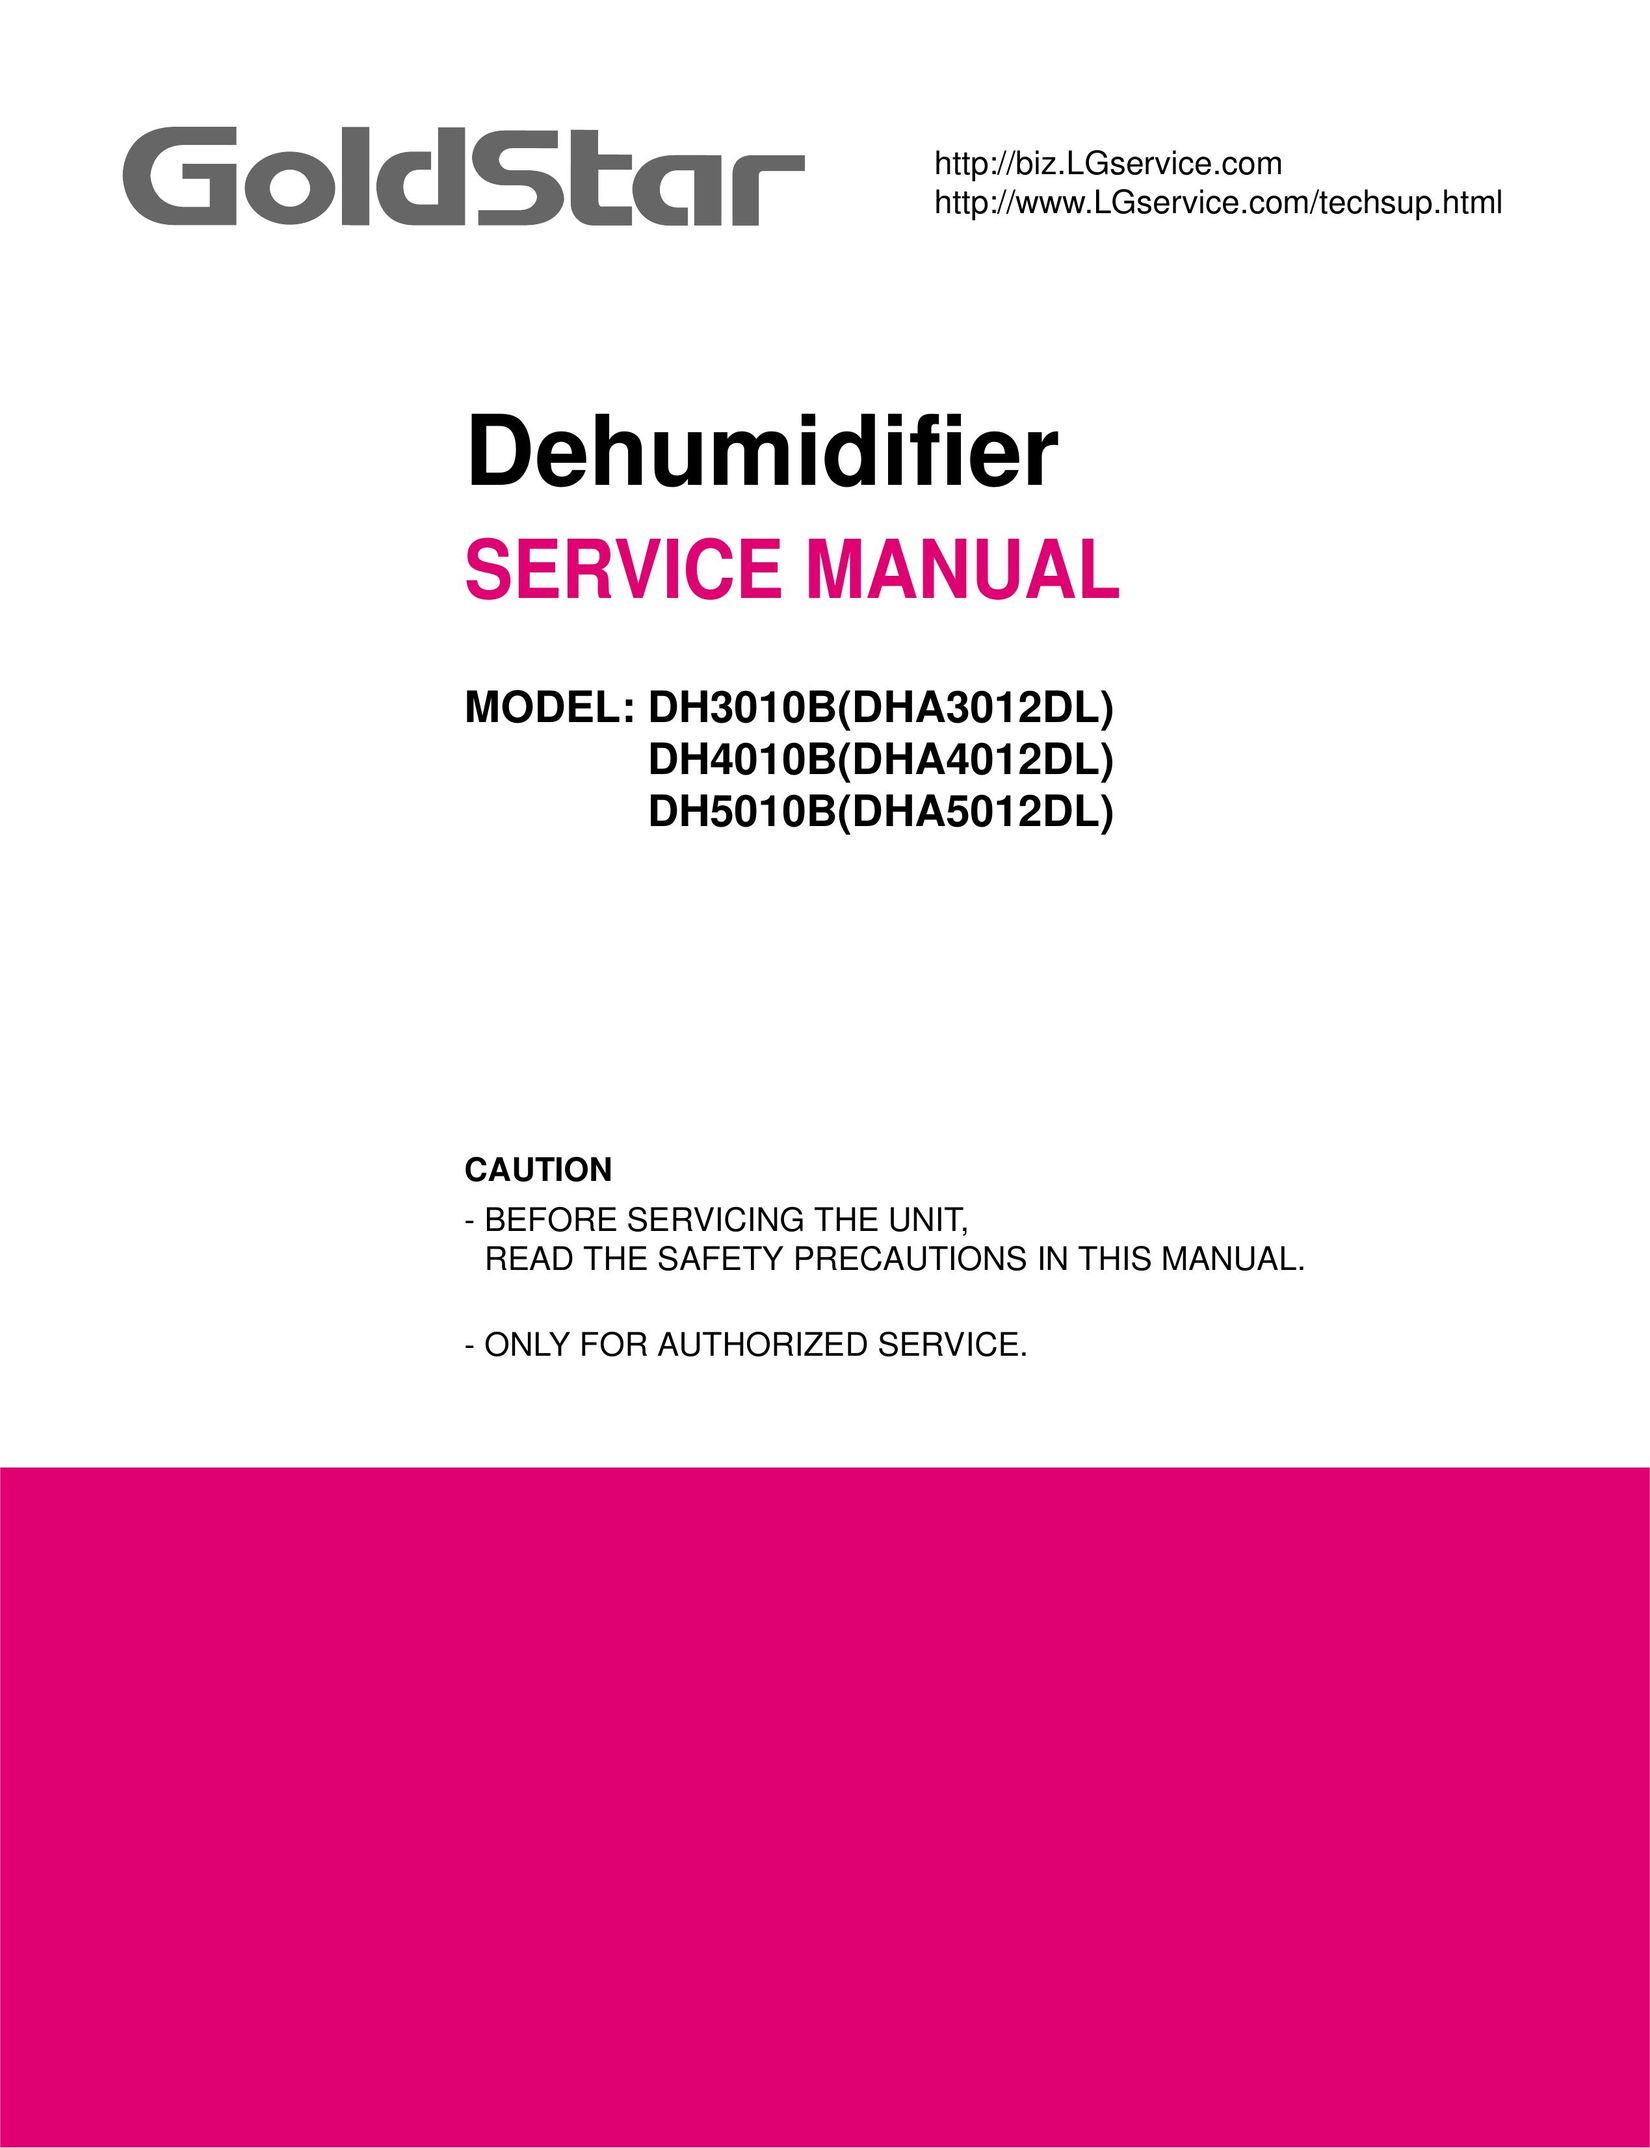 Goldstar DHA5012DL Dehumidifier User Manual